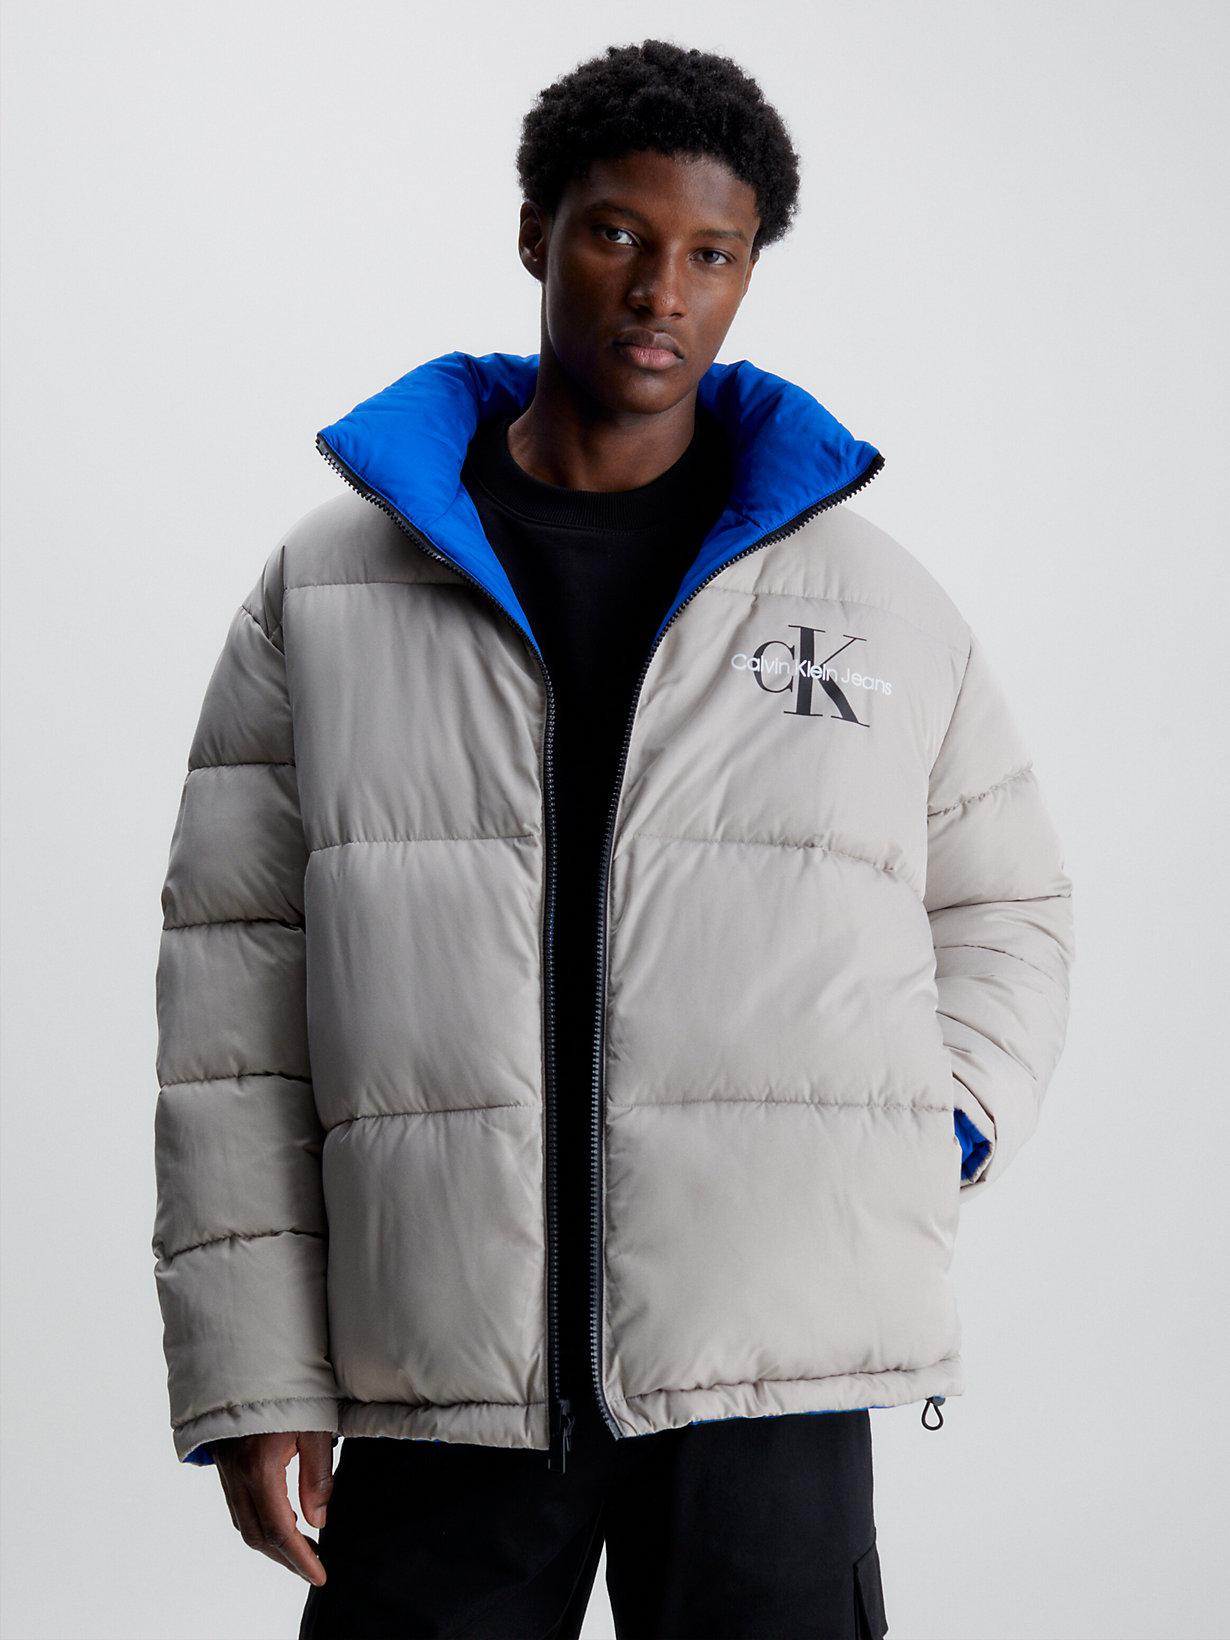 Calvin Klein Jeans LINED MONOGRAM REVERSIBLE - Winter jacket